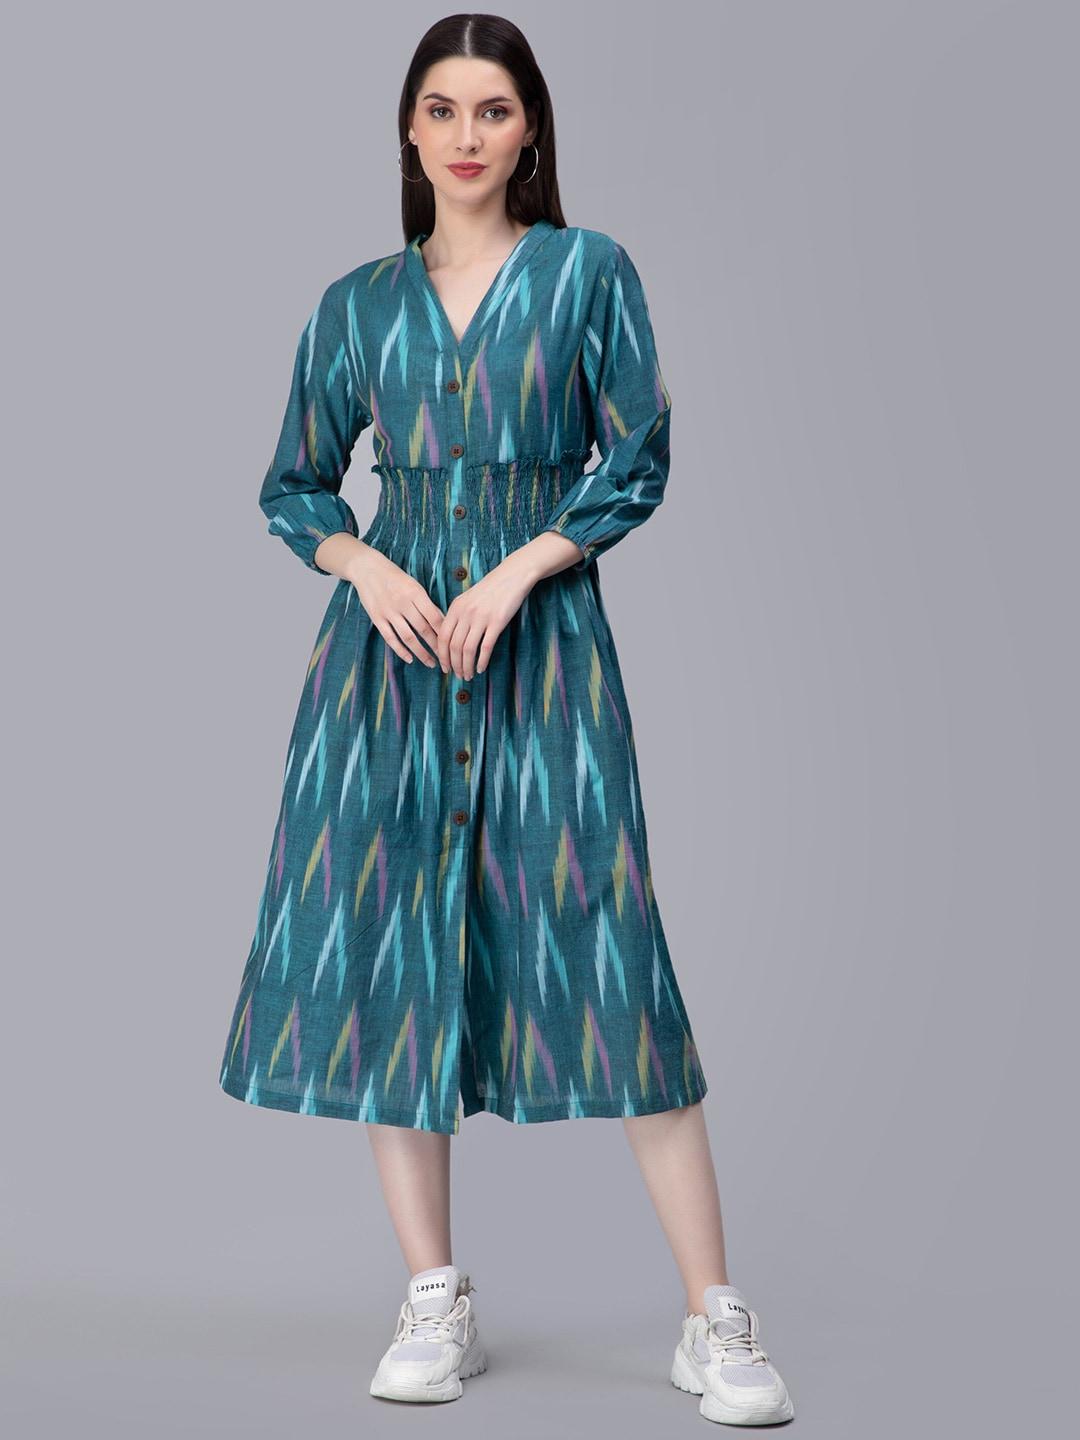 entellus ethnic motifs ikkat printed v-neck smocked shirt dress